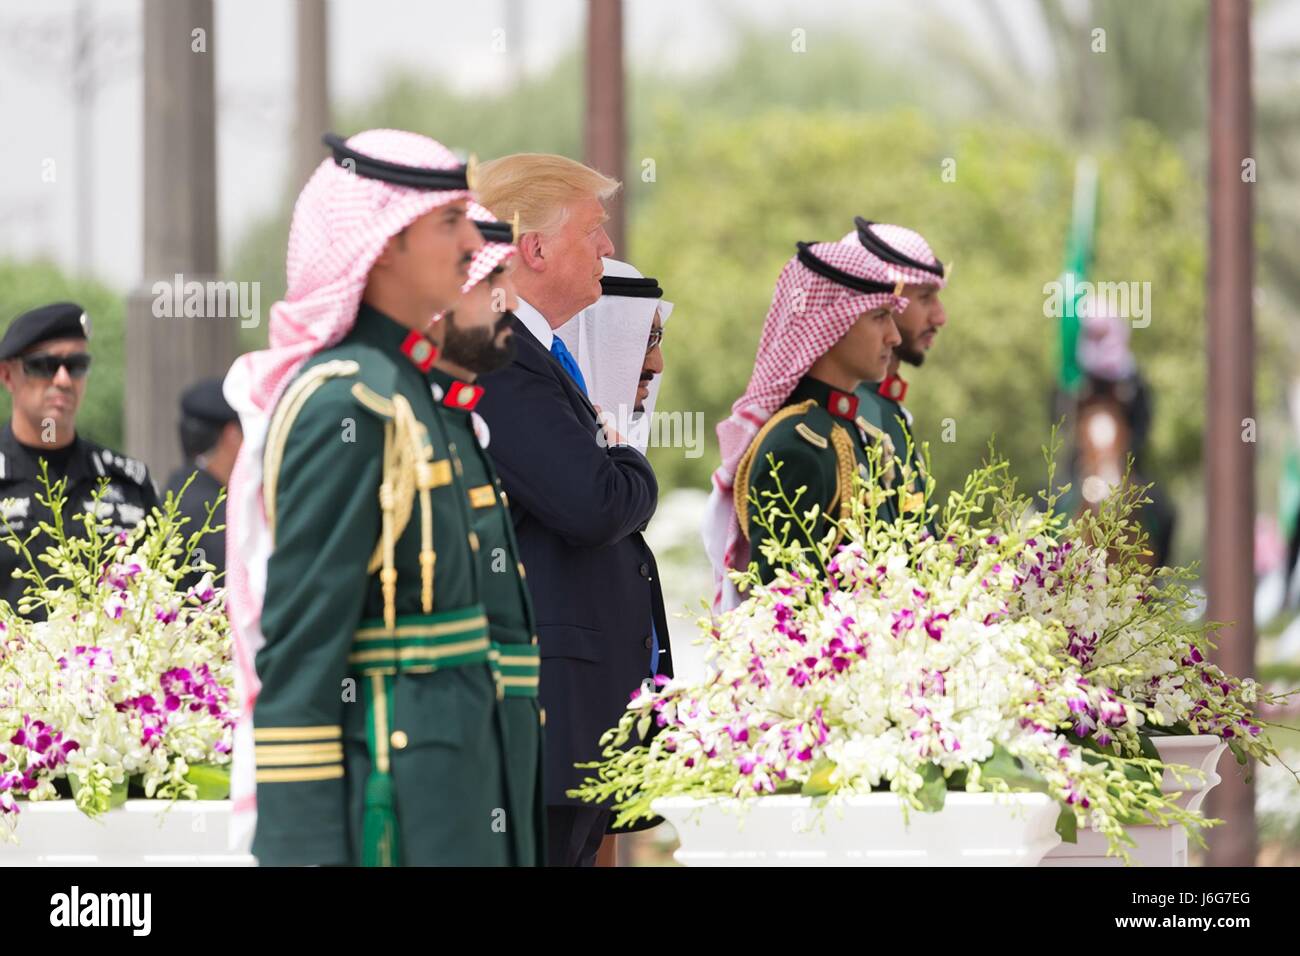 U.S. President Donald Trump stands with Saudi King Salman bin Abdulaziz Al Saud during arrival ceremonies at King Khalid International Airport May 20, 2017 in Riyadh, Saudi Arabia. Stock Photo